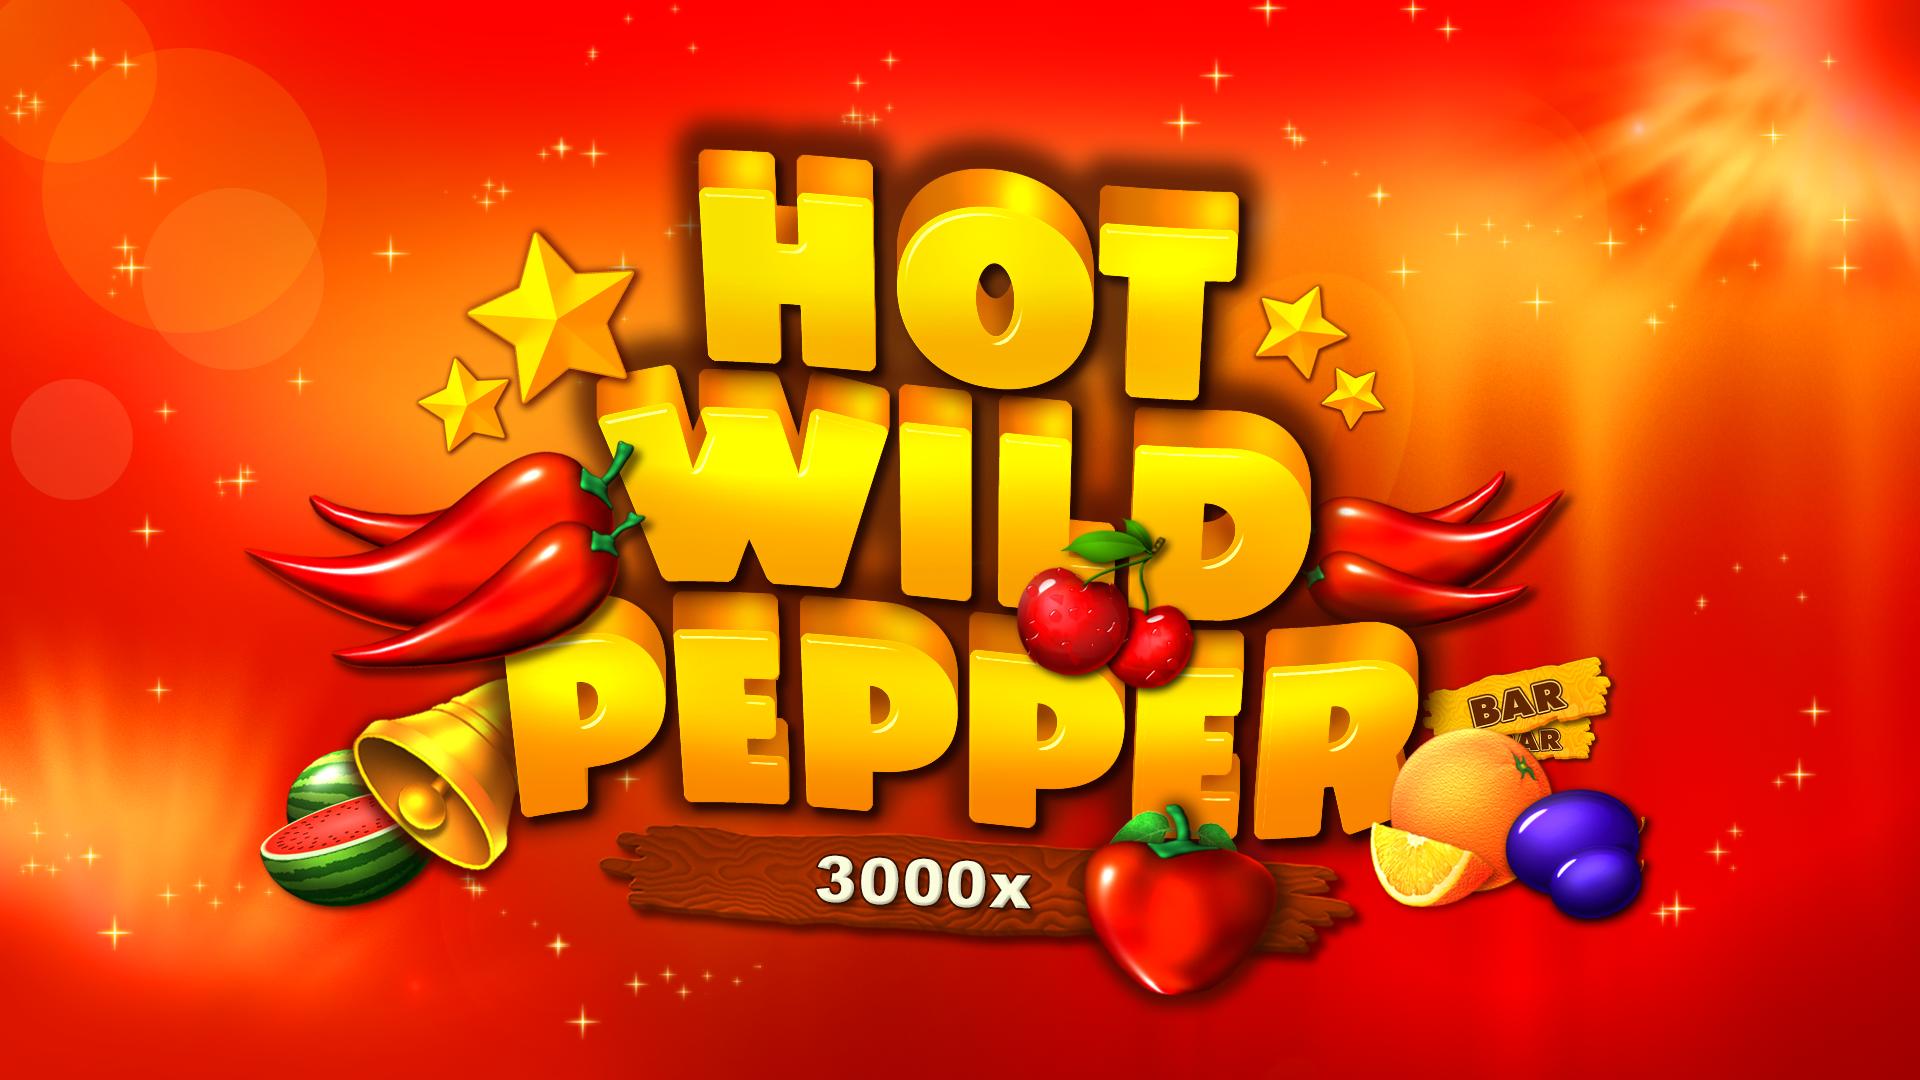 Hot Wild Pepper | Promotion pack | Online slot